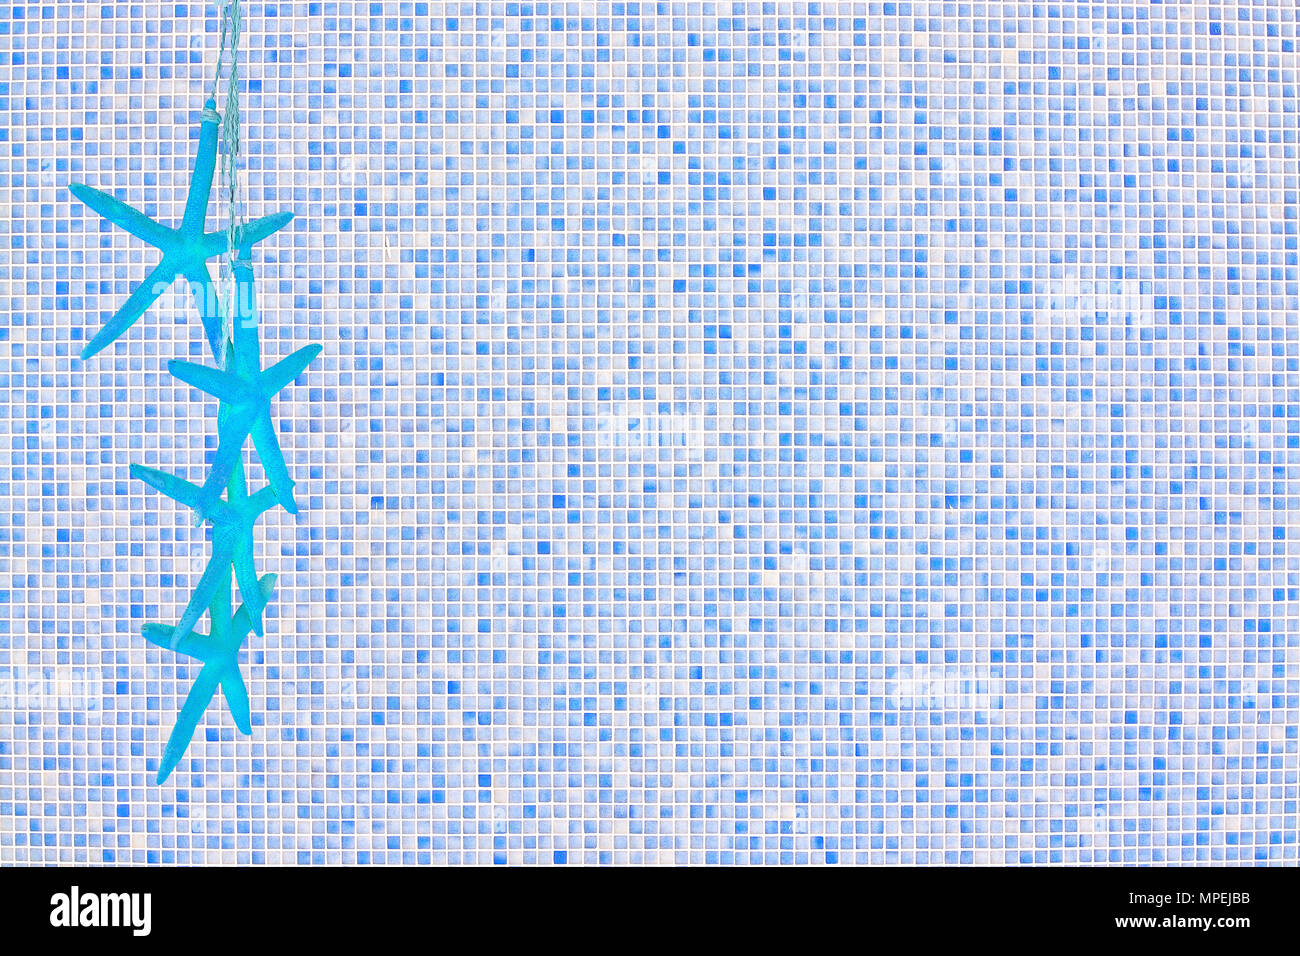 Estrella de mar azul sobre fondo de pared de mosaico en color azul para copiar contexto espacial tema verano Foto de stock